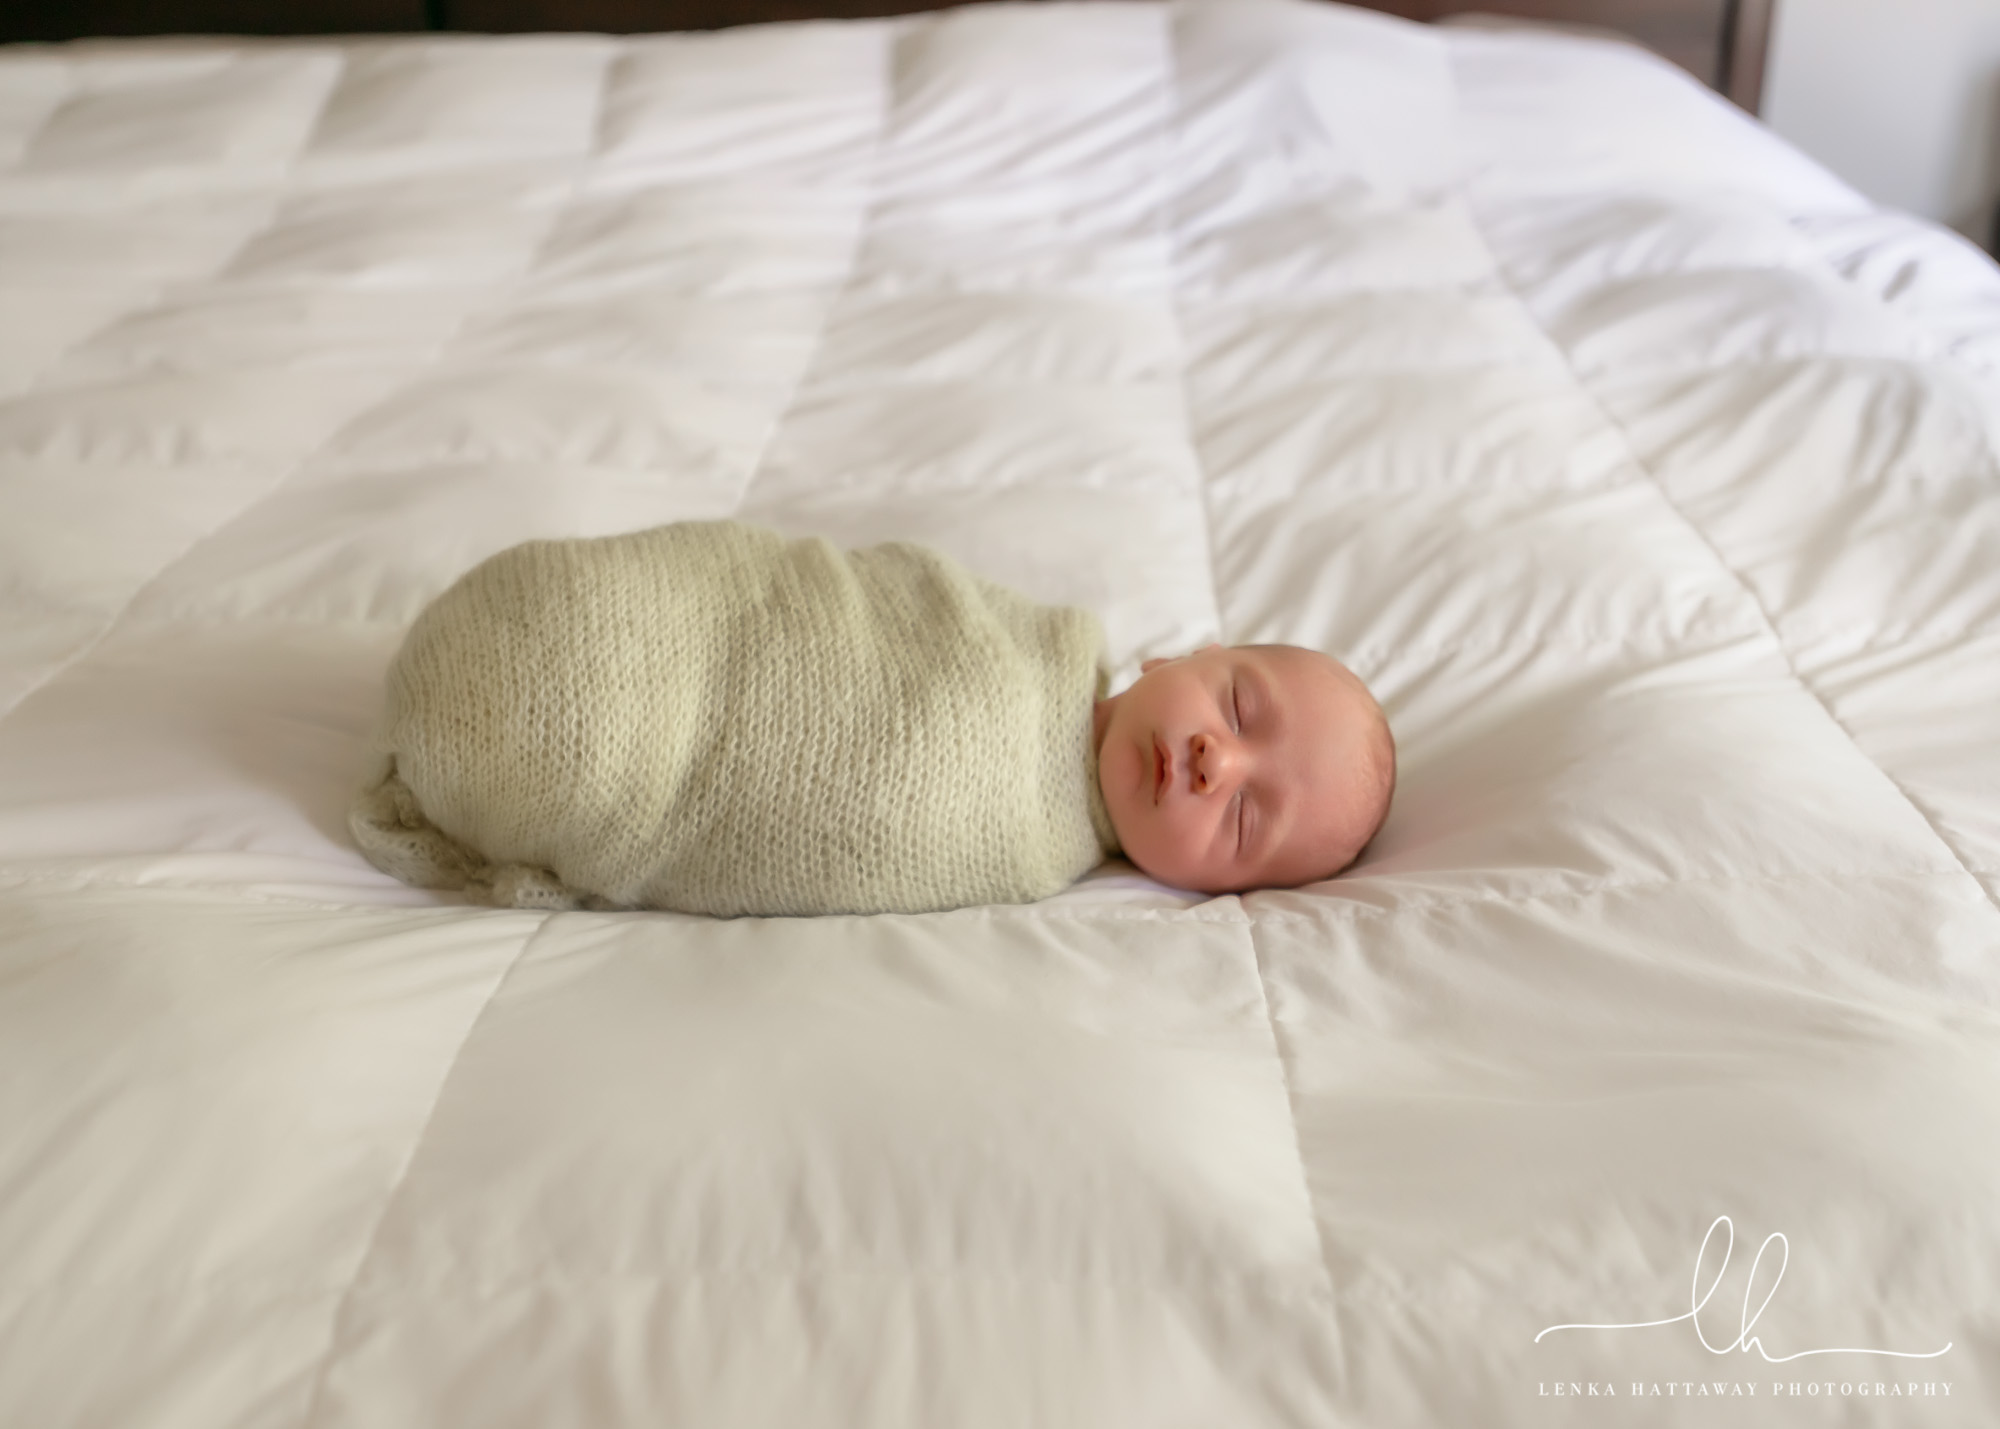 Baby photo on bed by Asheville Newborn Photographer, Lenka Hattaway.